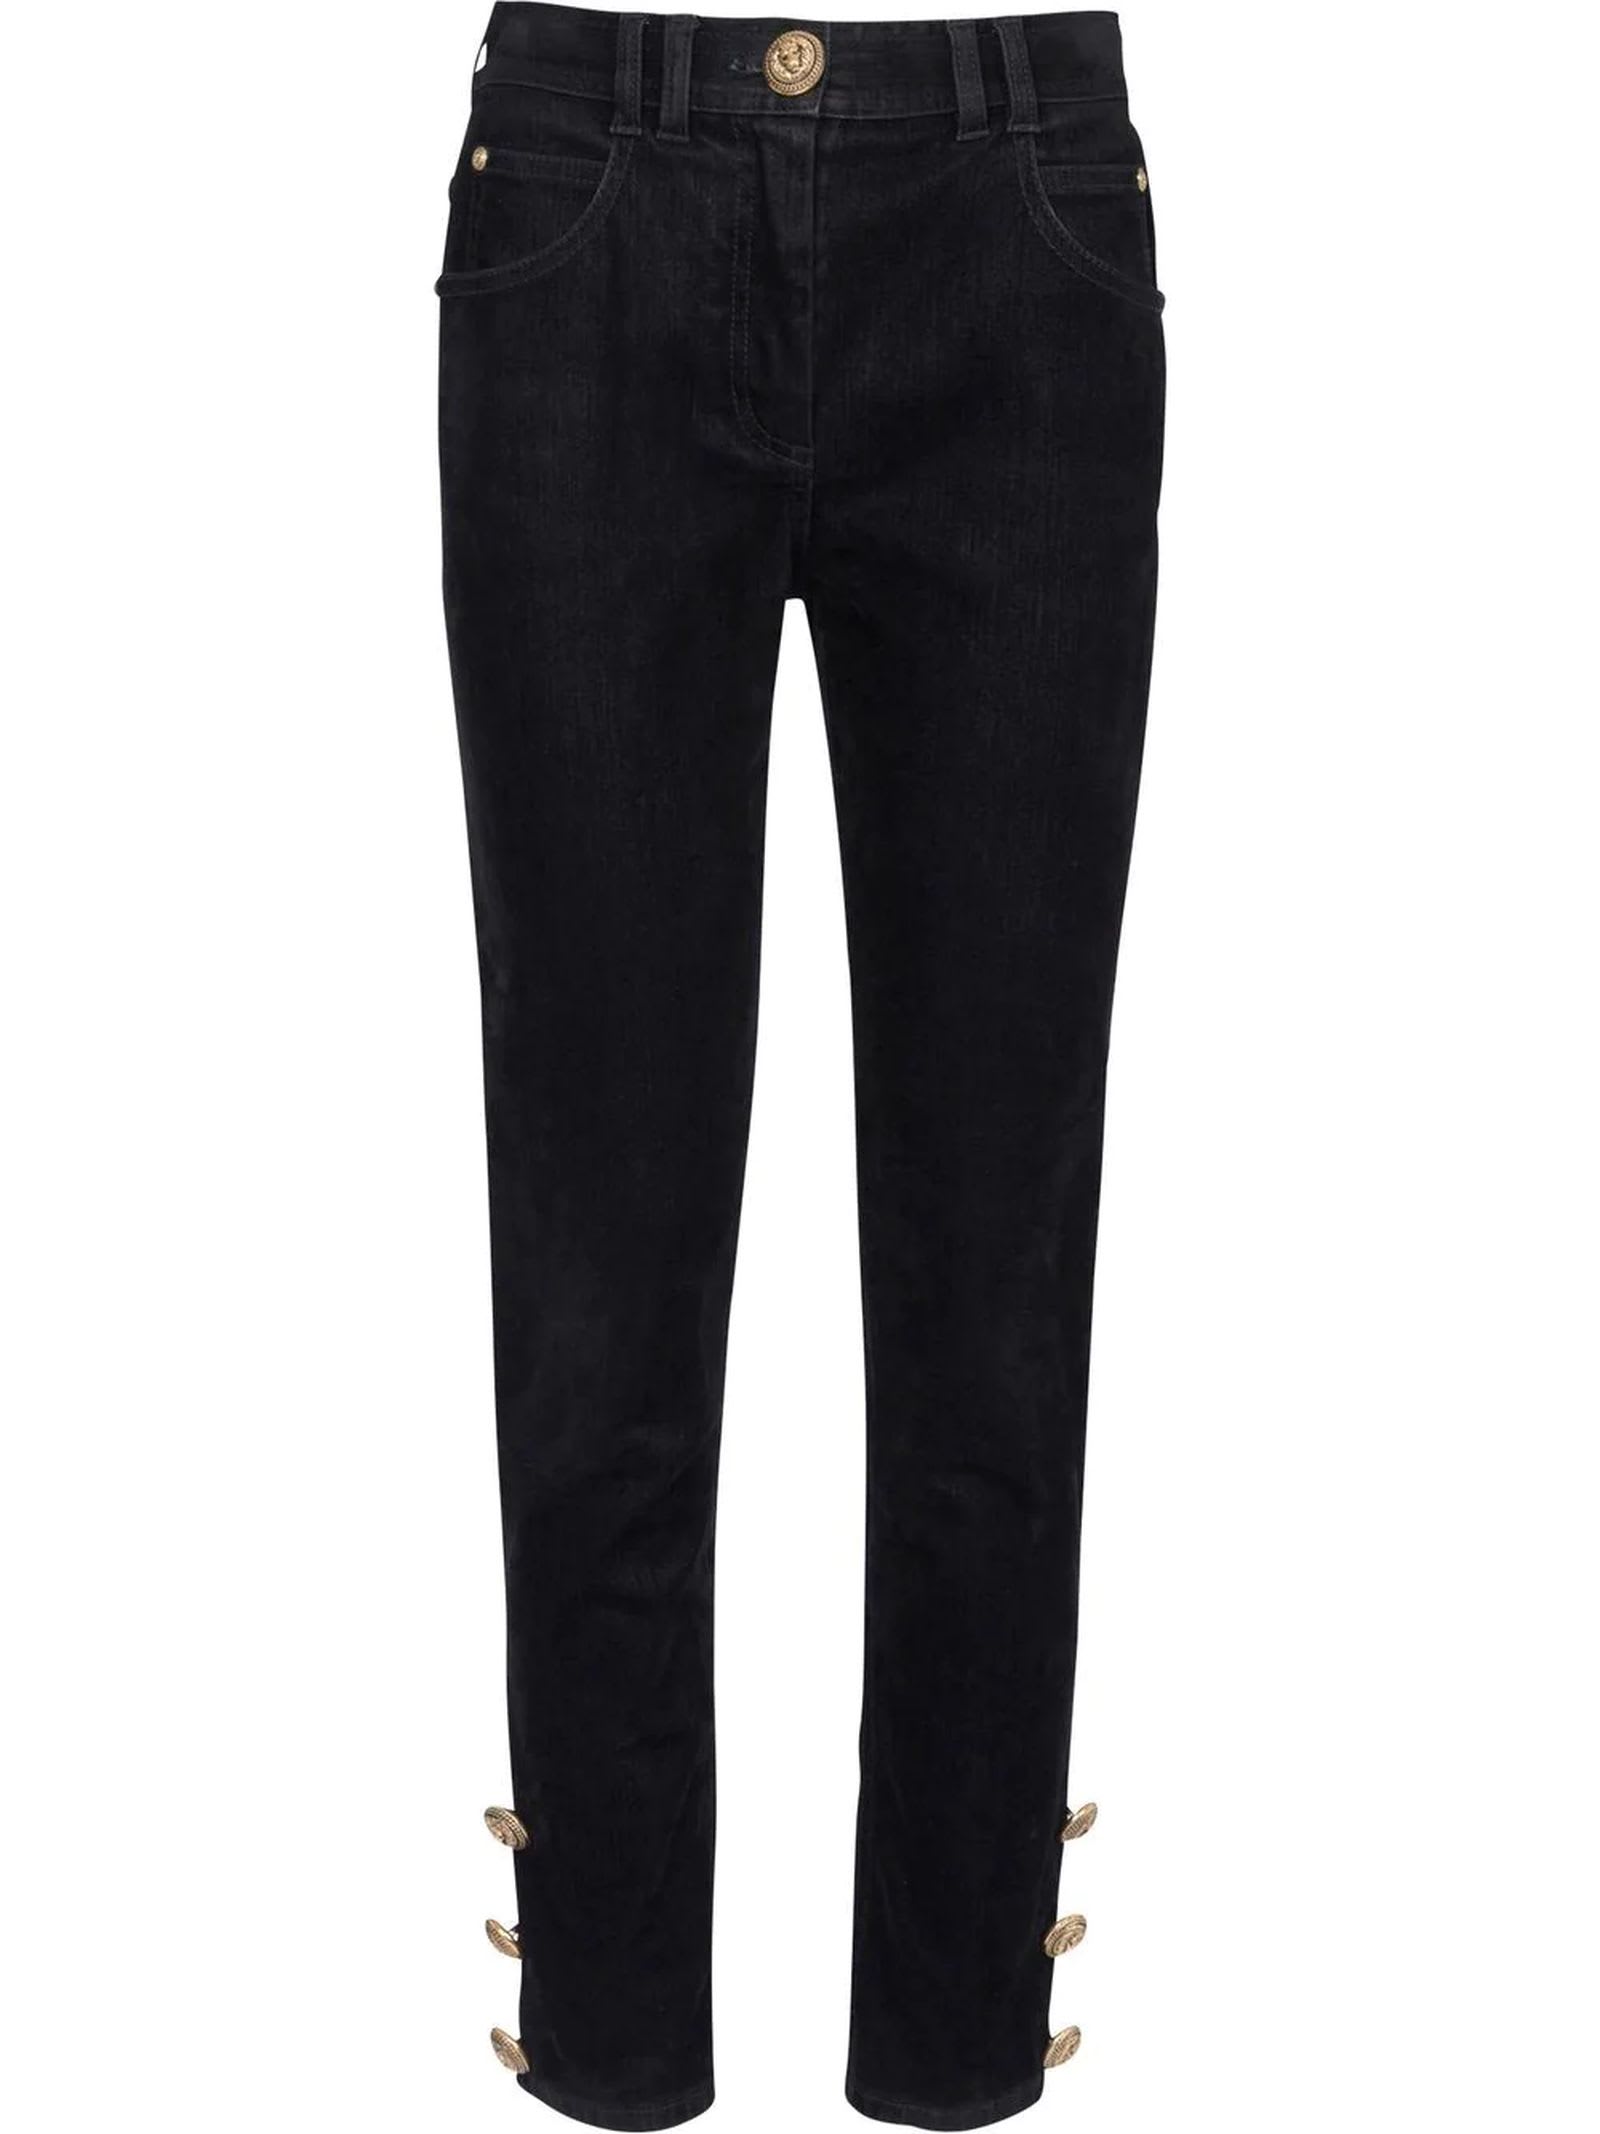 Balmain Black Cotton Slim Cut Jeans